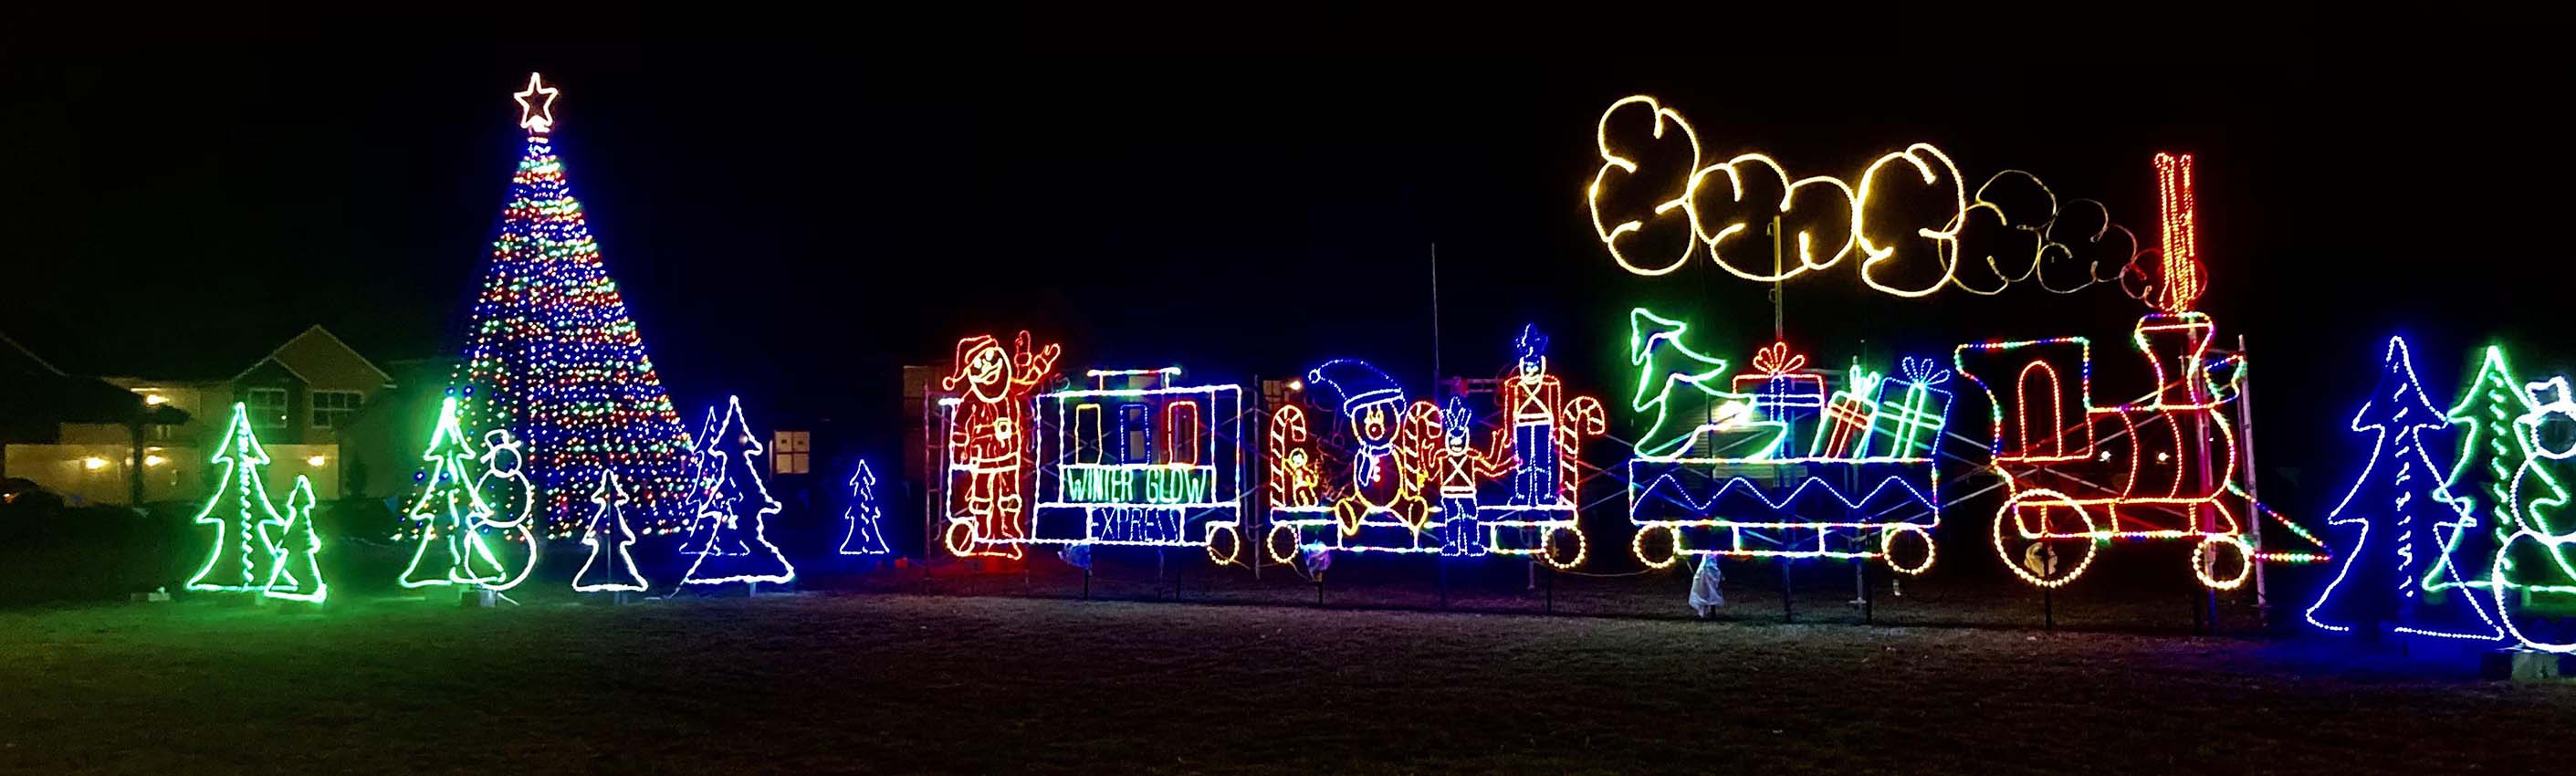 Winter Glow Spectacular Christmas Lights Liberty Lake Spokane Washington